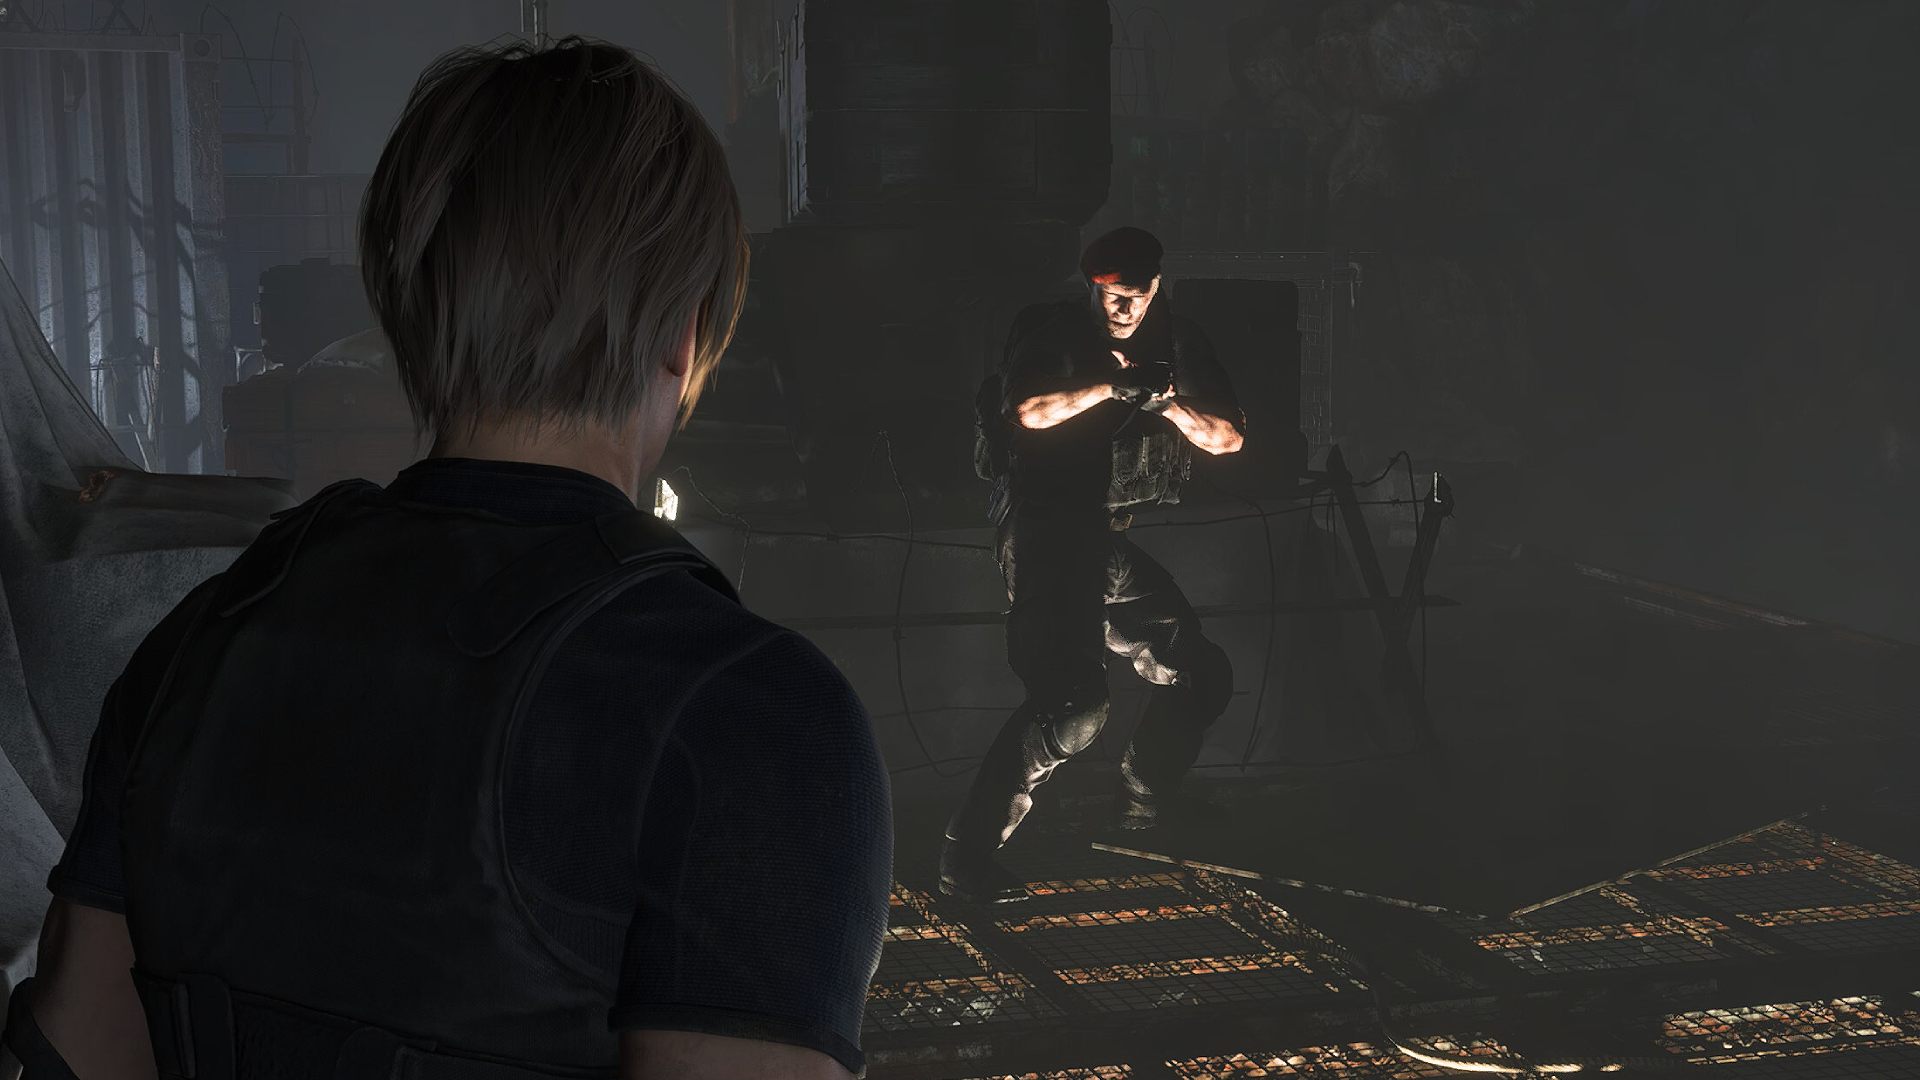 Resident Evil 4 Remake PC - It's Got Issues - Optimised Settings